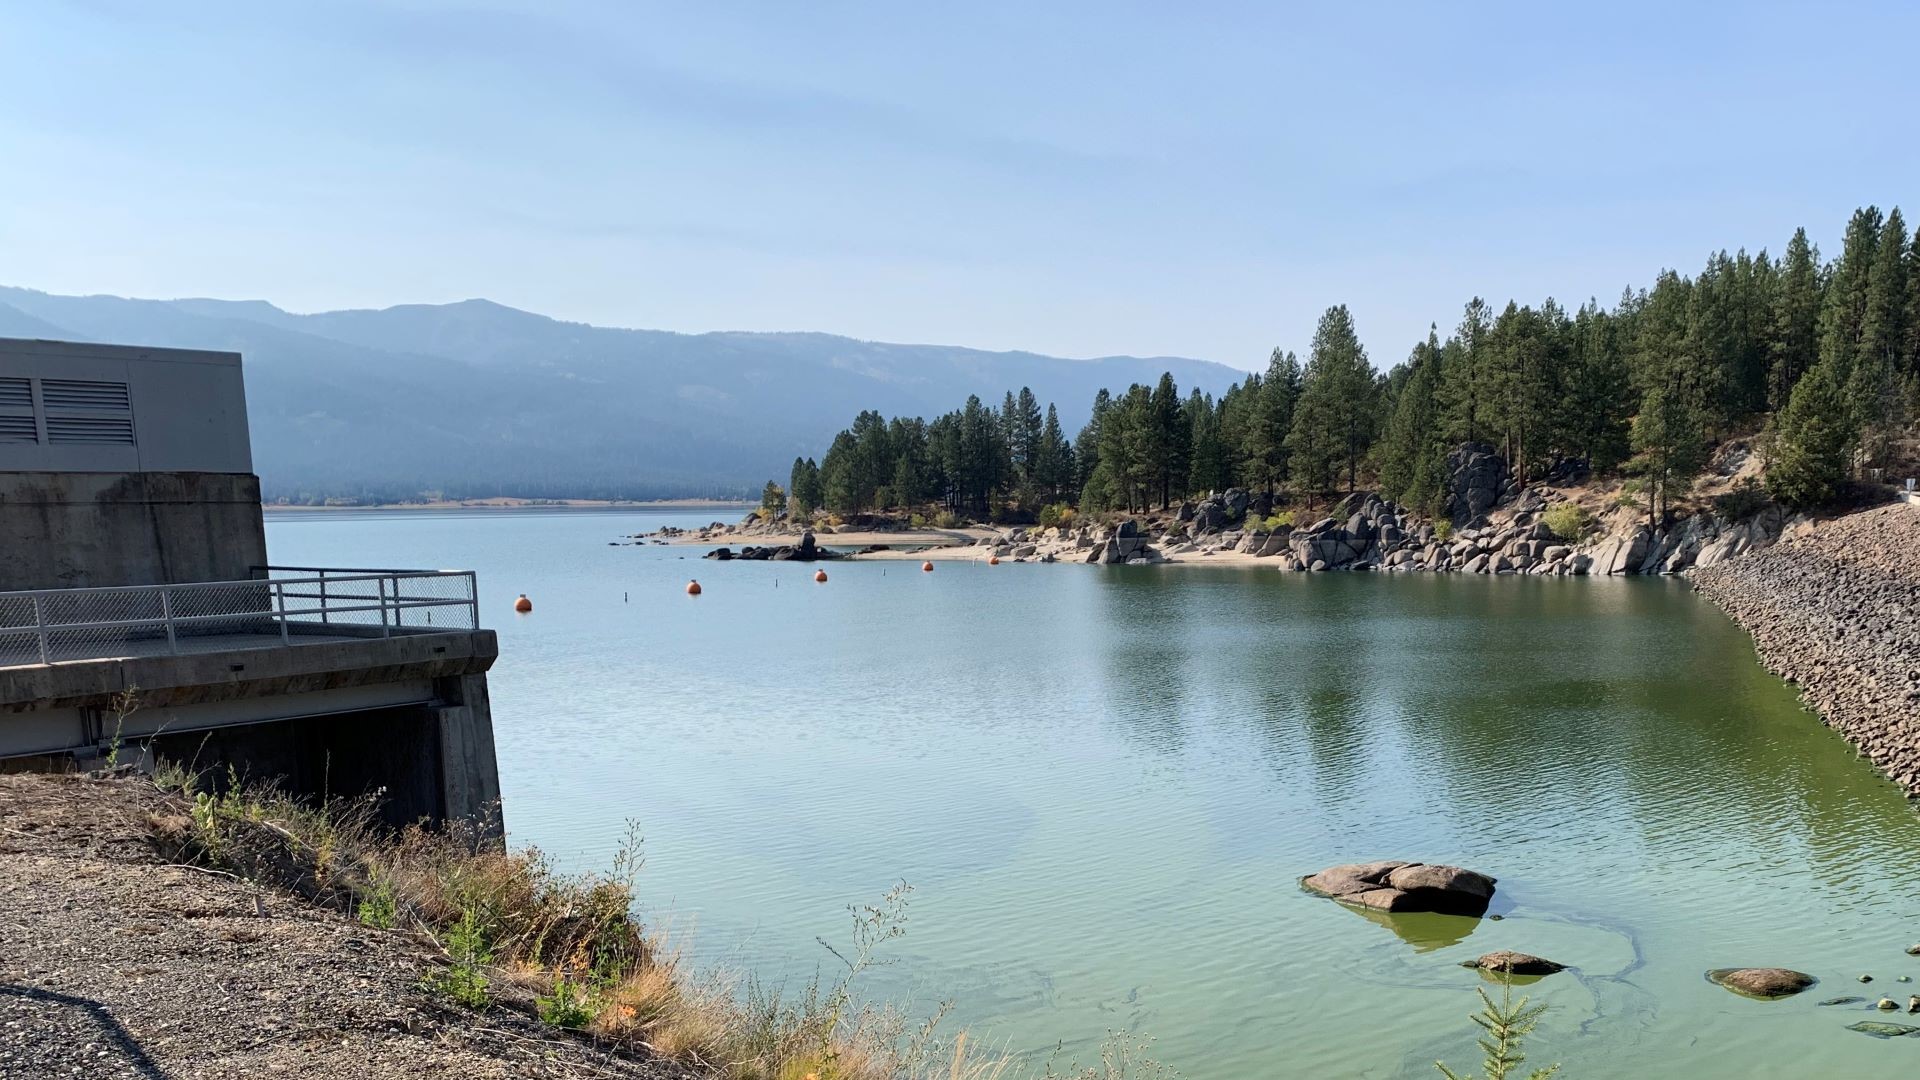 Health advisory issued for Cascade Reservoir due to harmful algae bloom